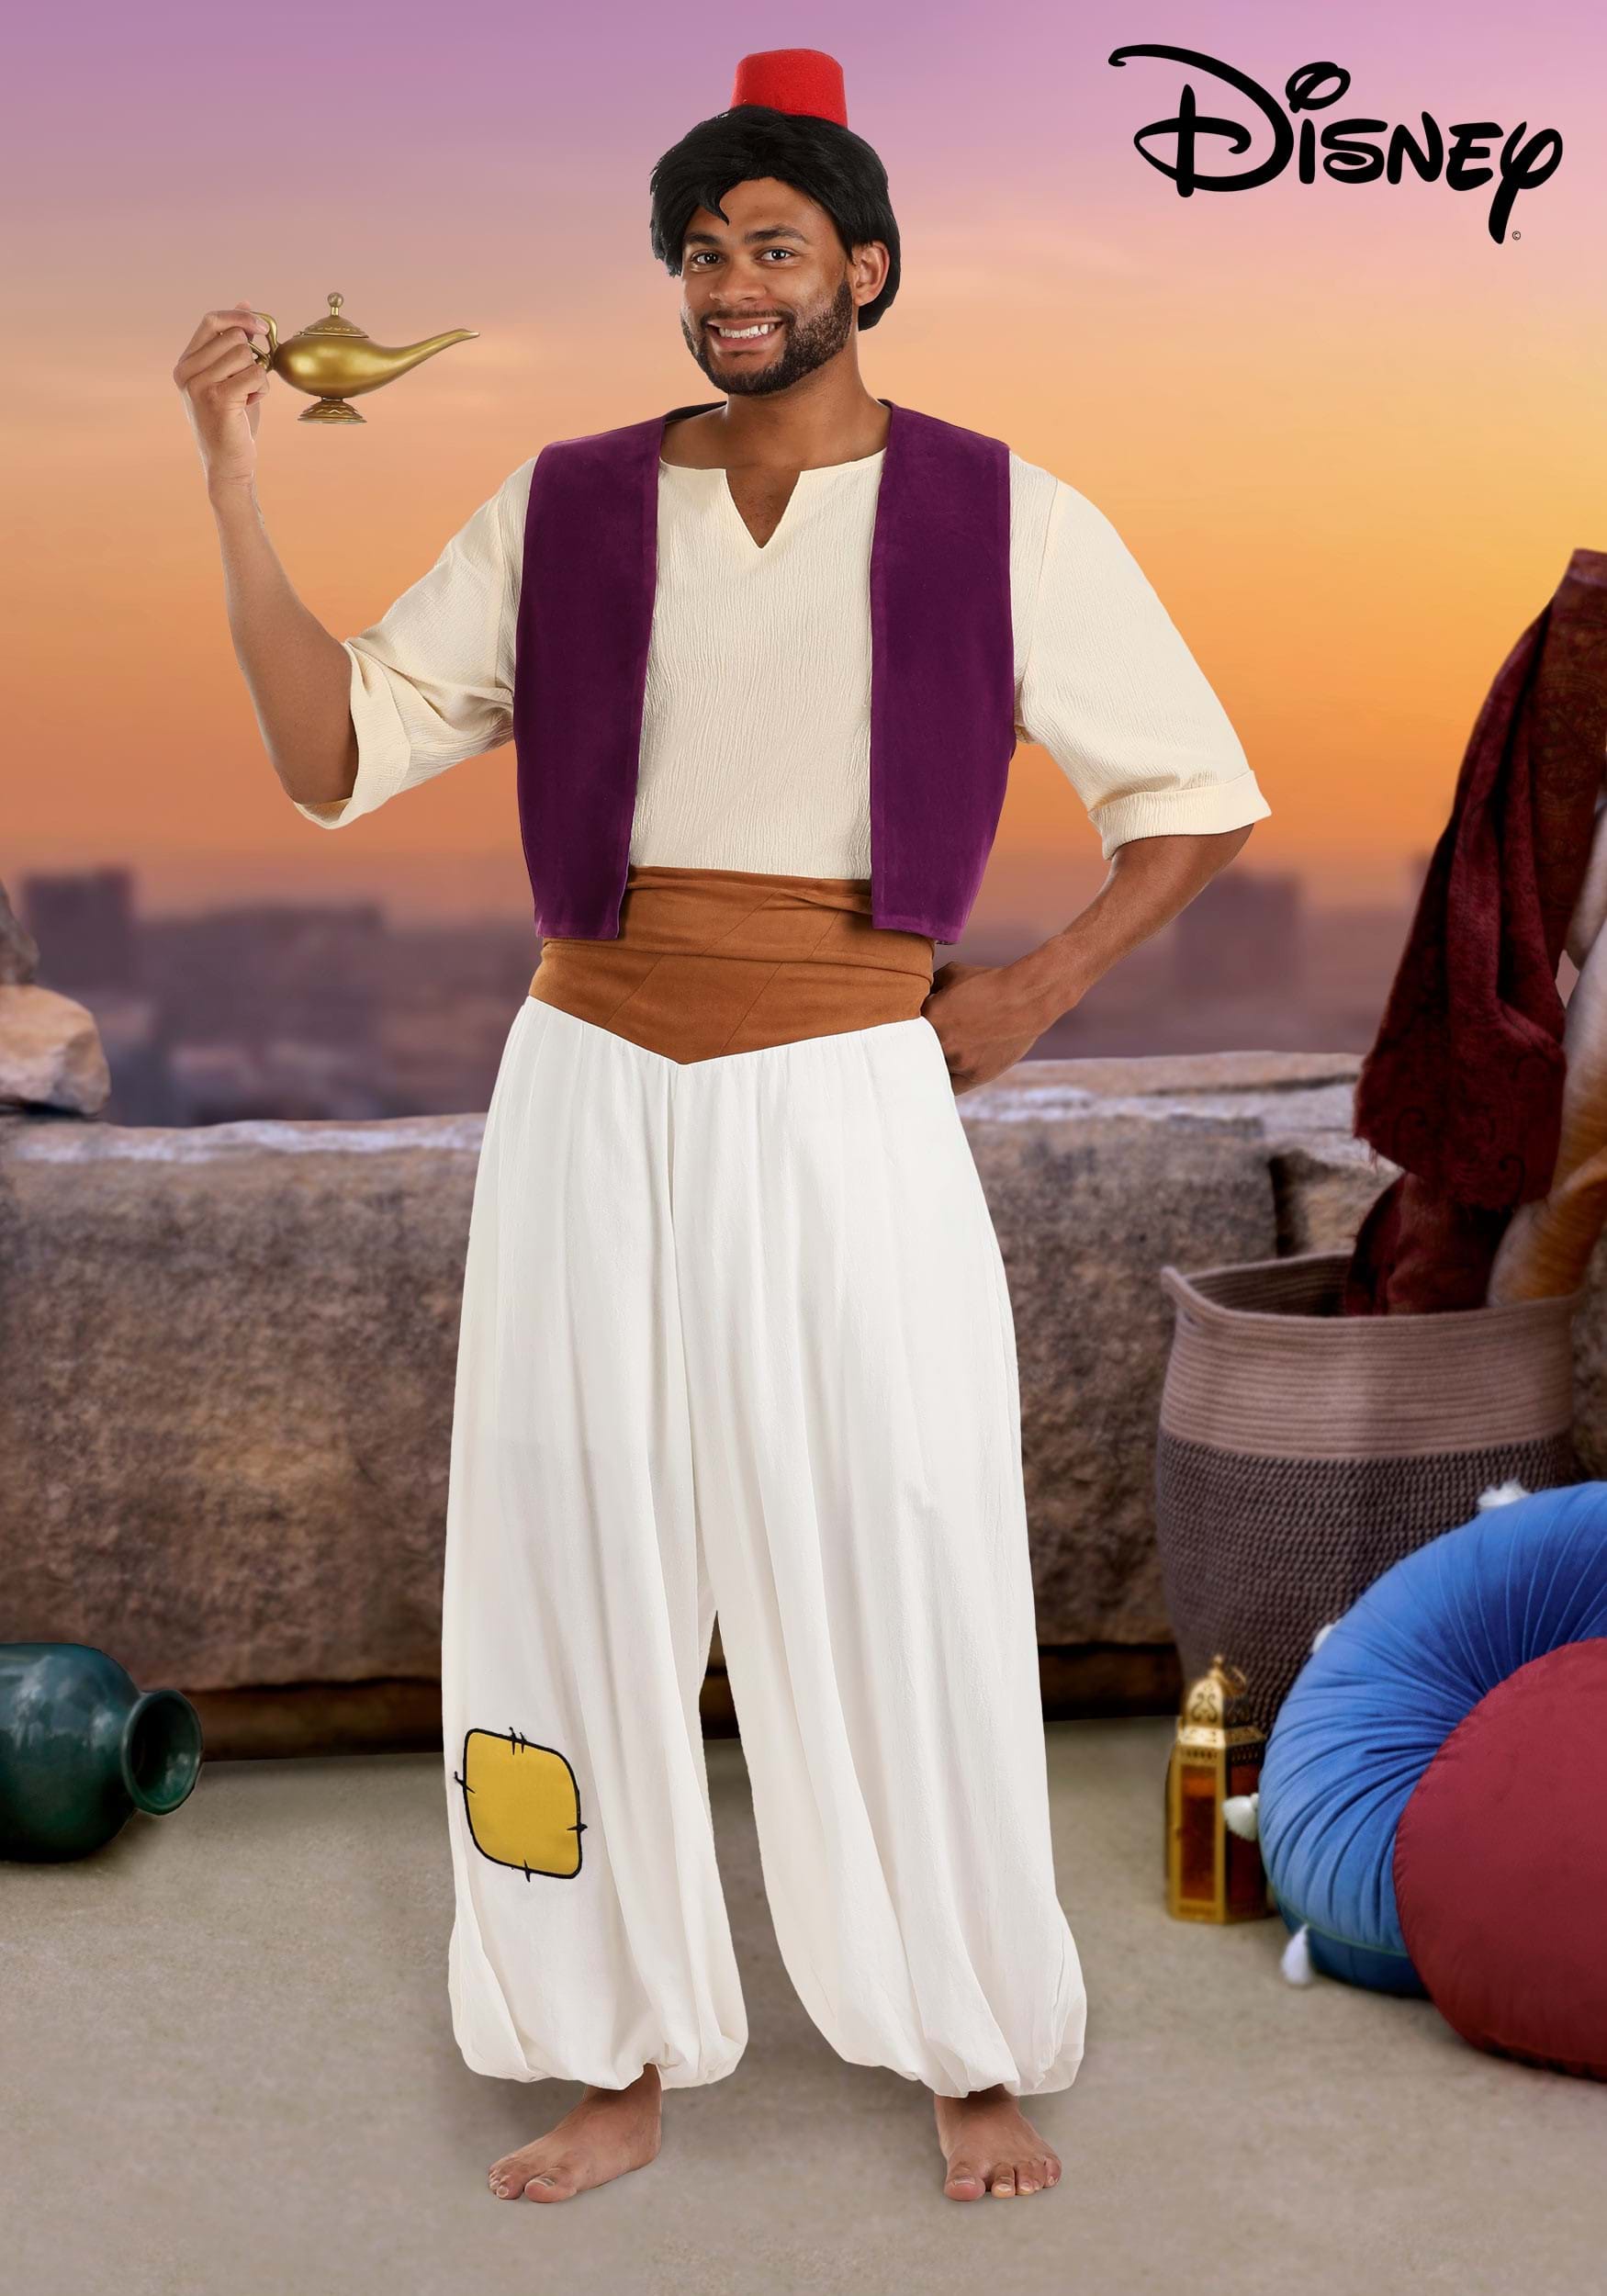 Plus Size Disney Aladdin Men's Costume